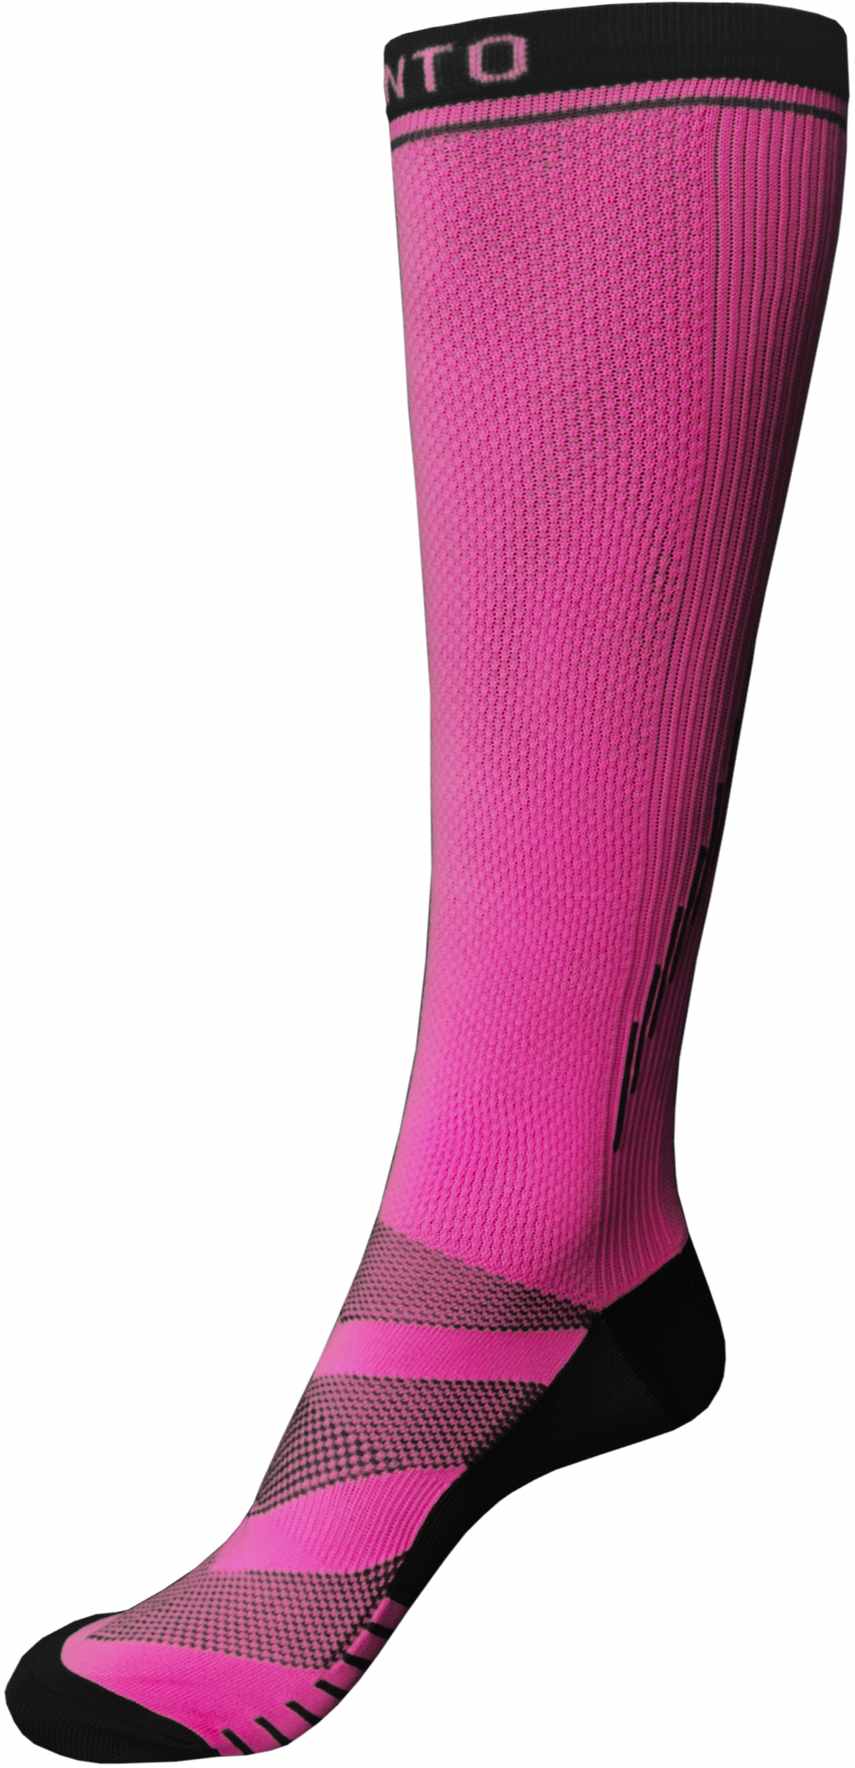 Compression knee socks